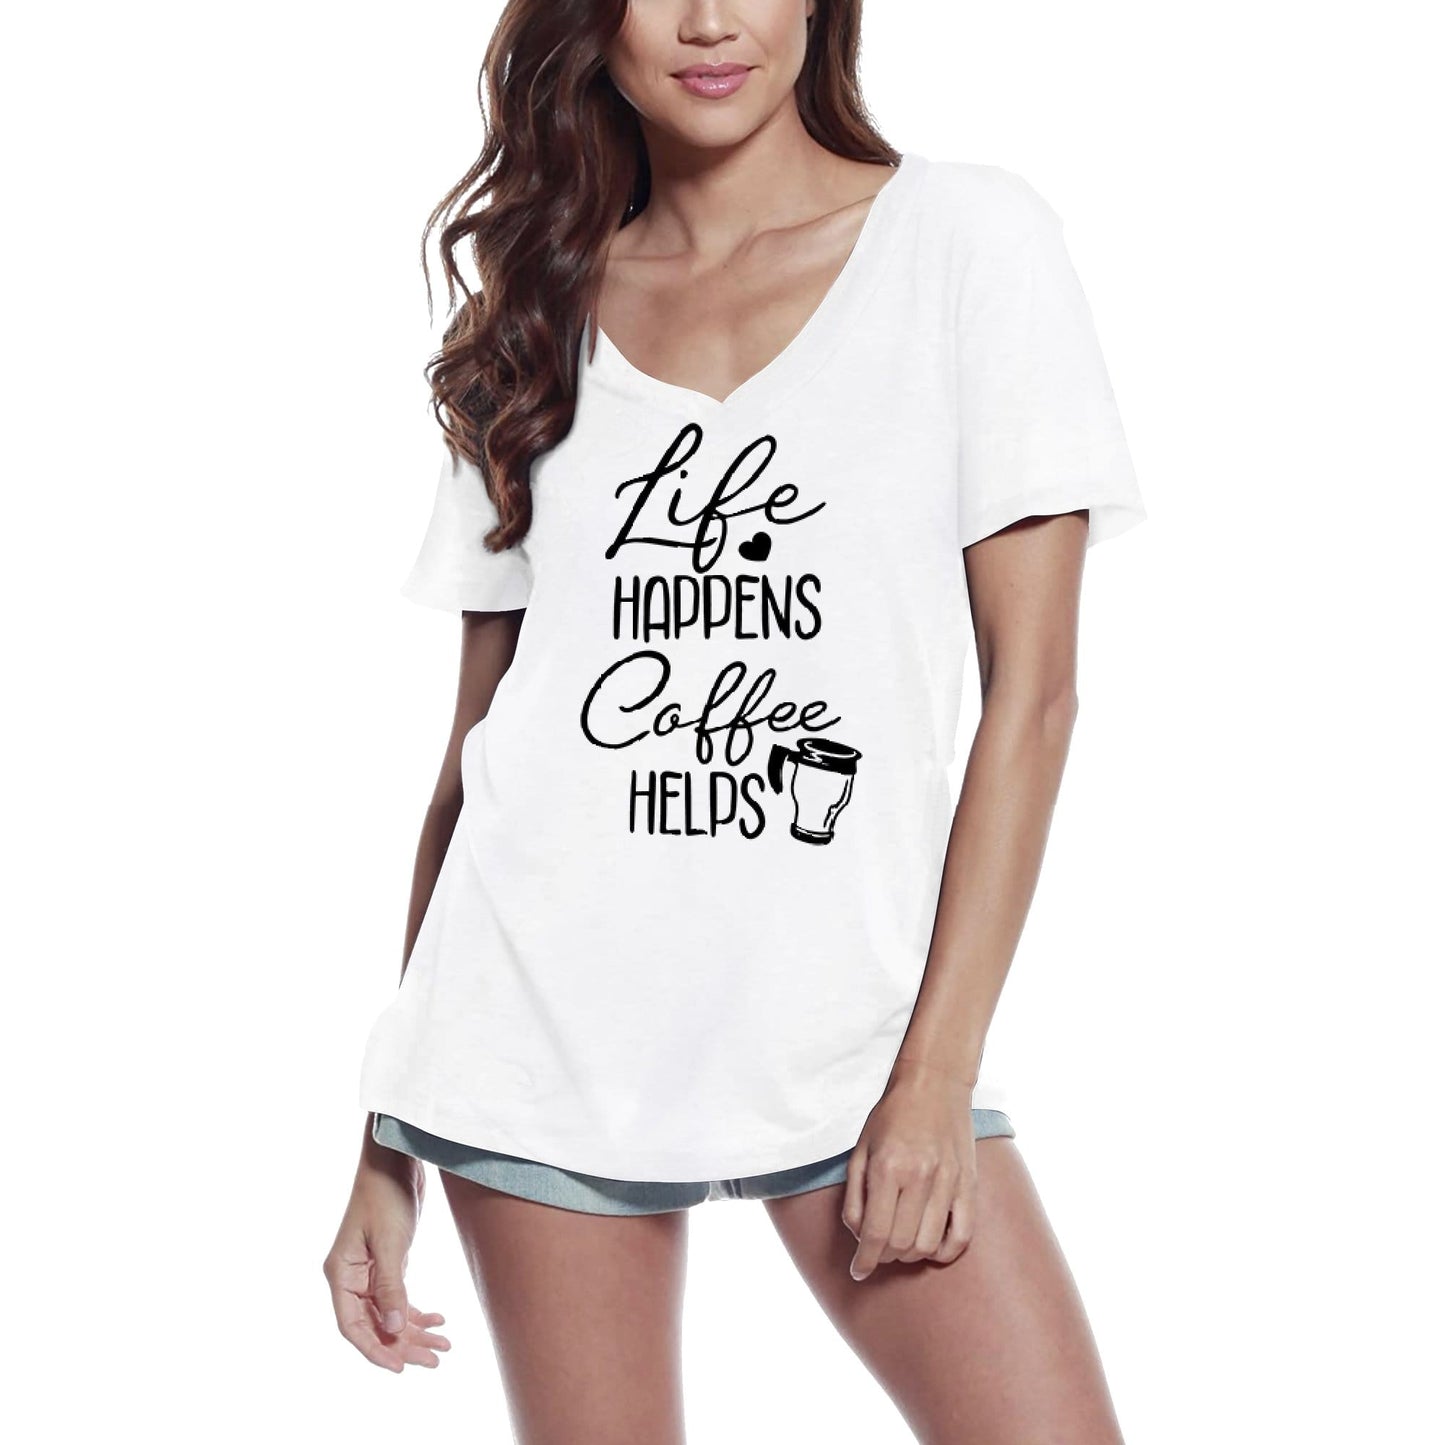 ULTRABASIC Women's T-Shirt Life Happens Coffee Helps - Short Sleeve Tee Shirt Tops